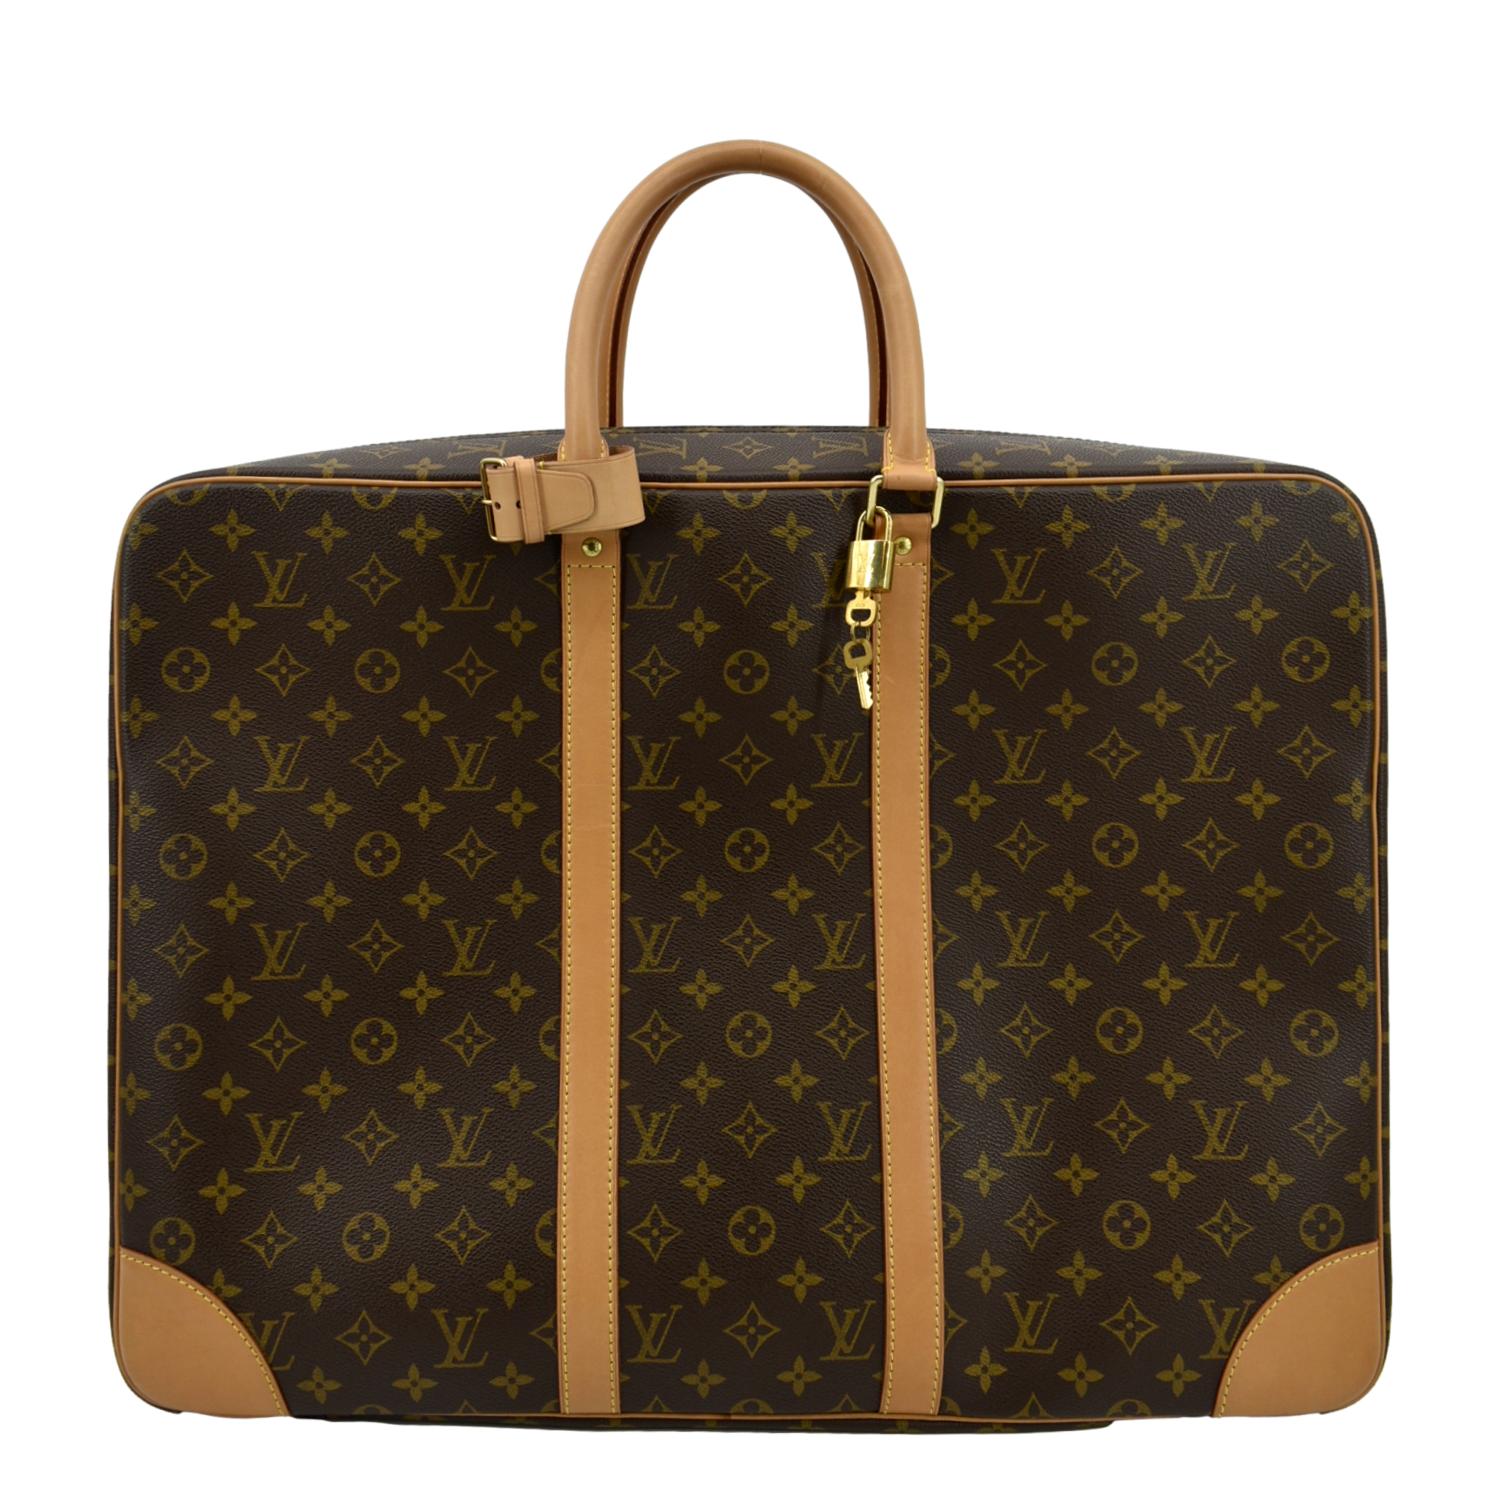 LOUIS VUITTON Sirius 45 Monogram Canvas Suitcase Travel Bag Brown